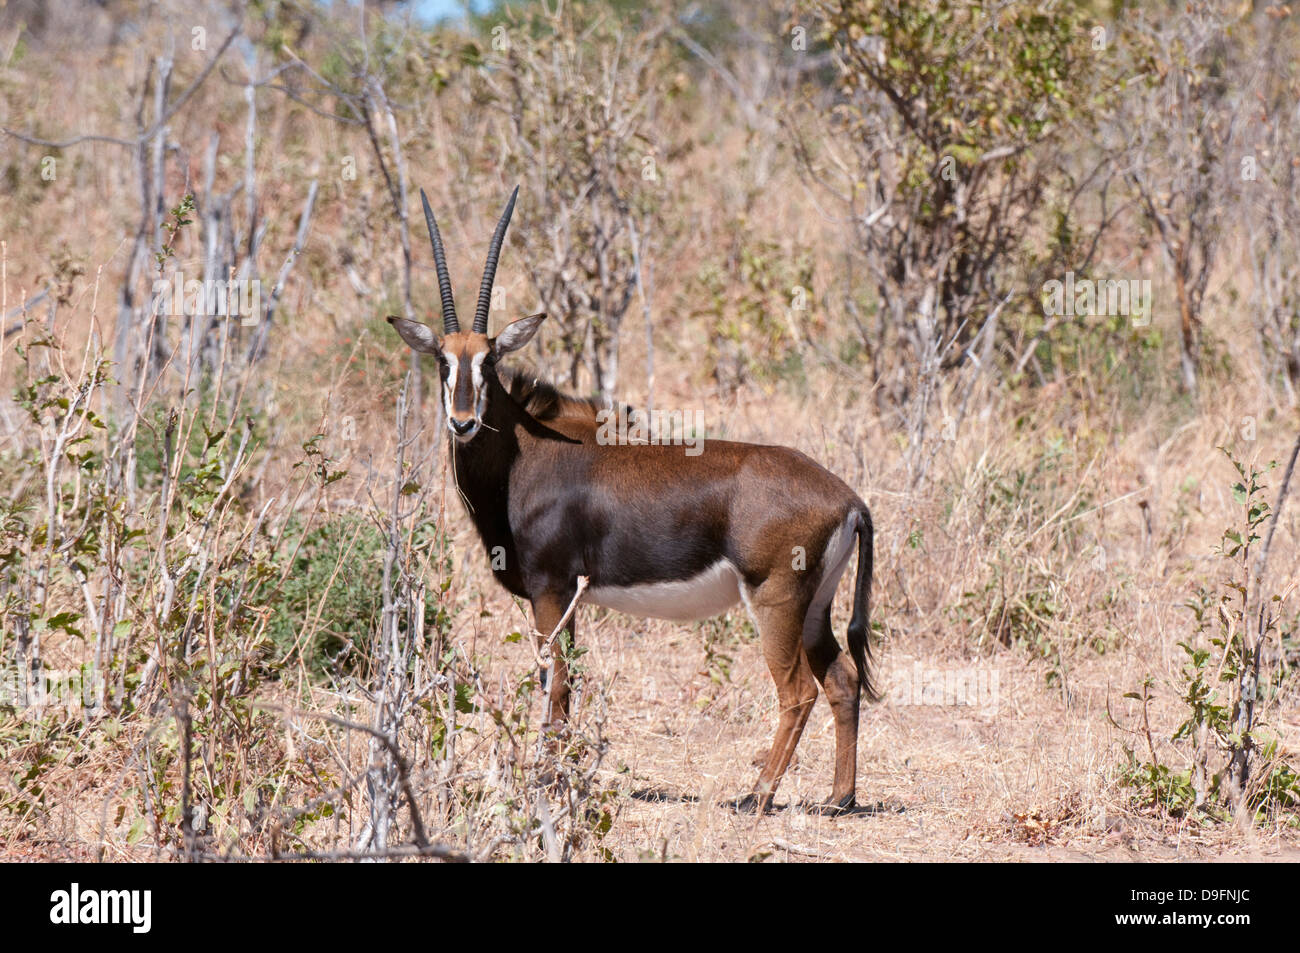 Sable antelope (Hippotragus niger), Chobe National Park, Botswana, Africa Stock Photo